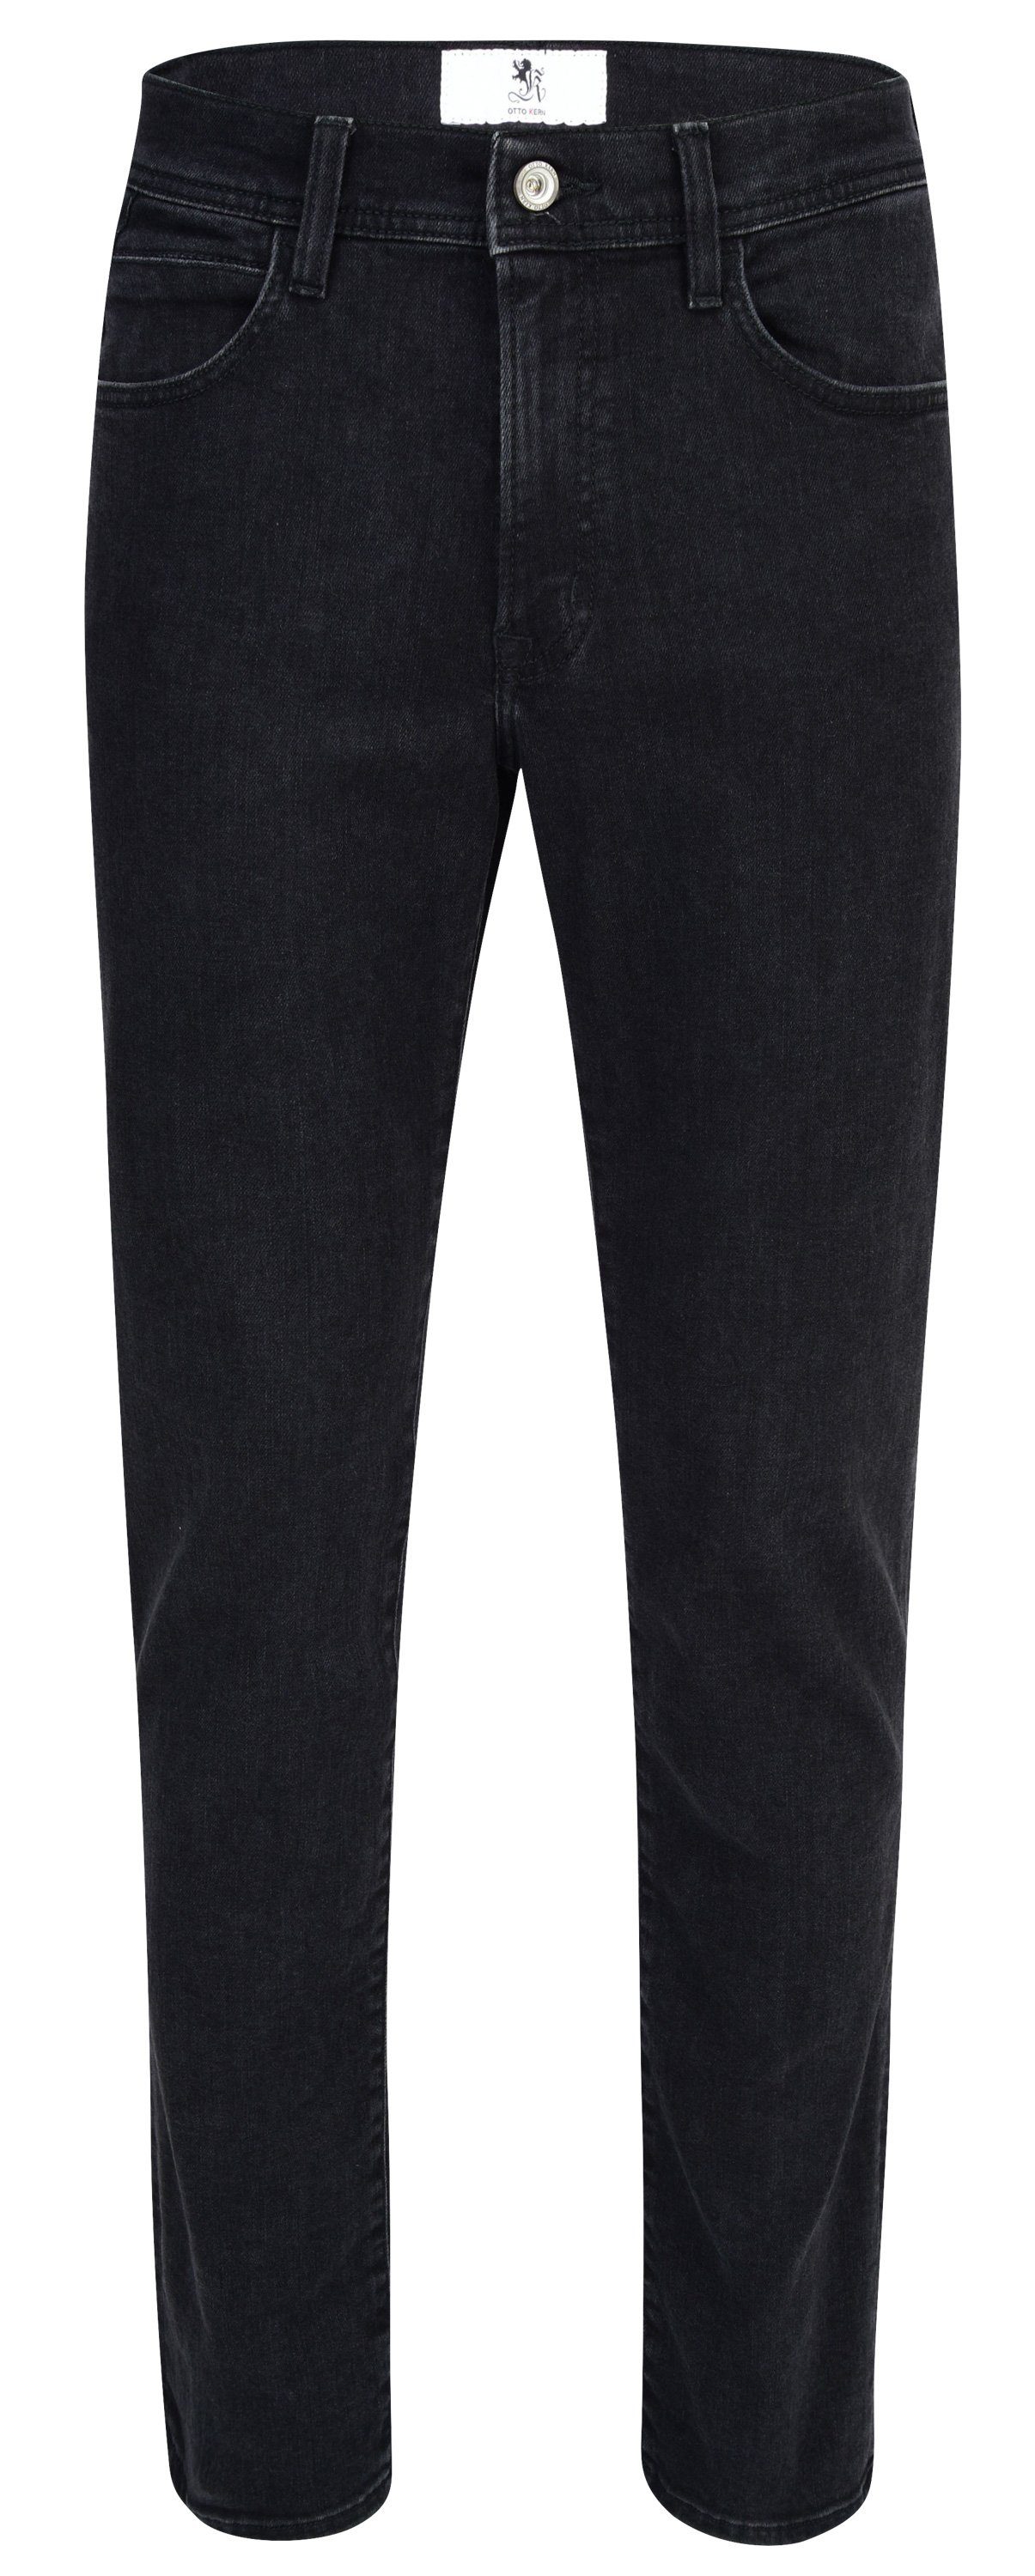  Kern 5-Pocket-Jeans OTTO KERN JOHN black black stonewash 67043 6812.9801